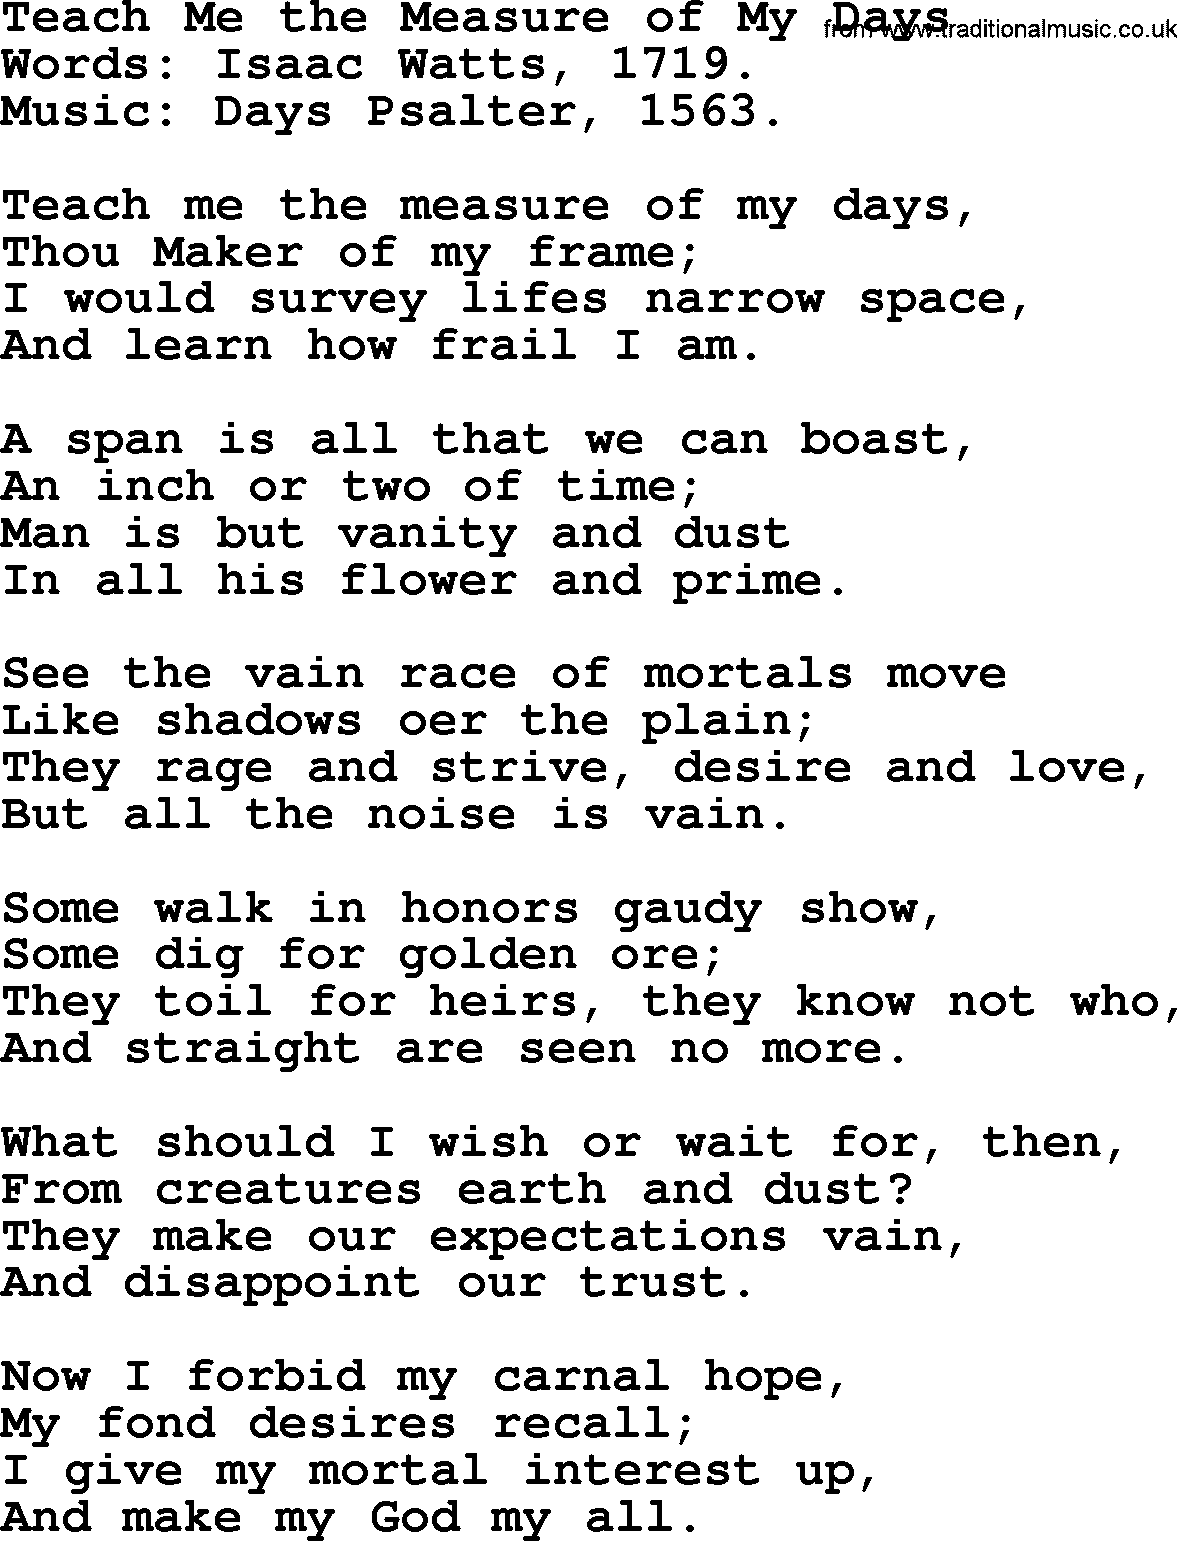 Isaac Watts Christian hymn: Teach Me the Measure of My Days- lyricss